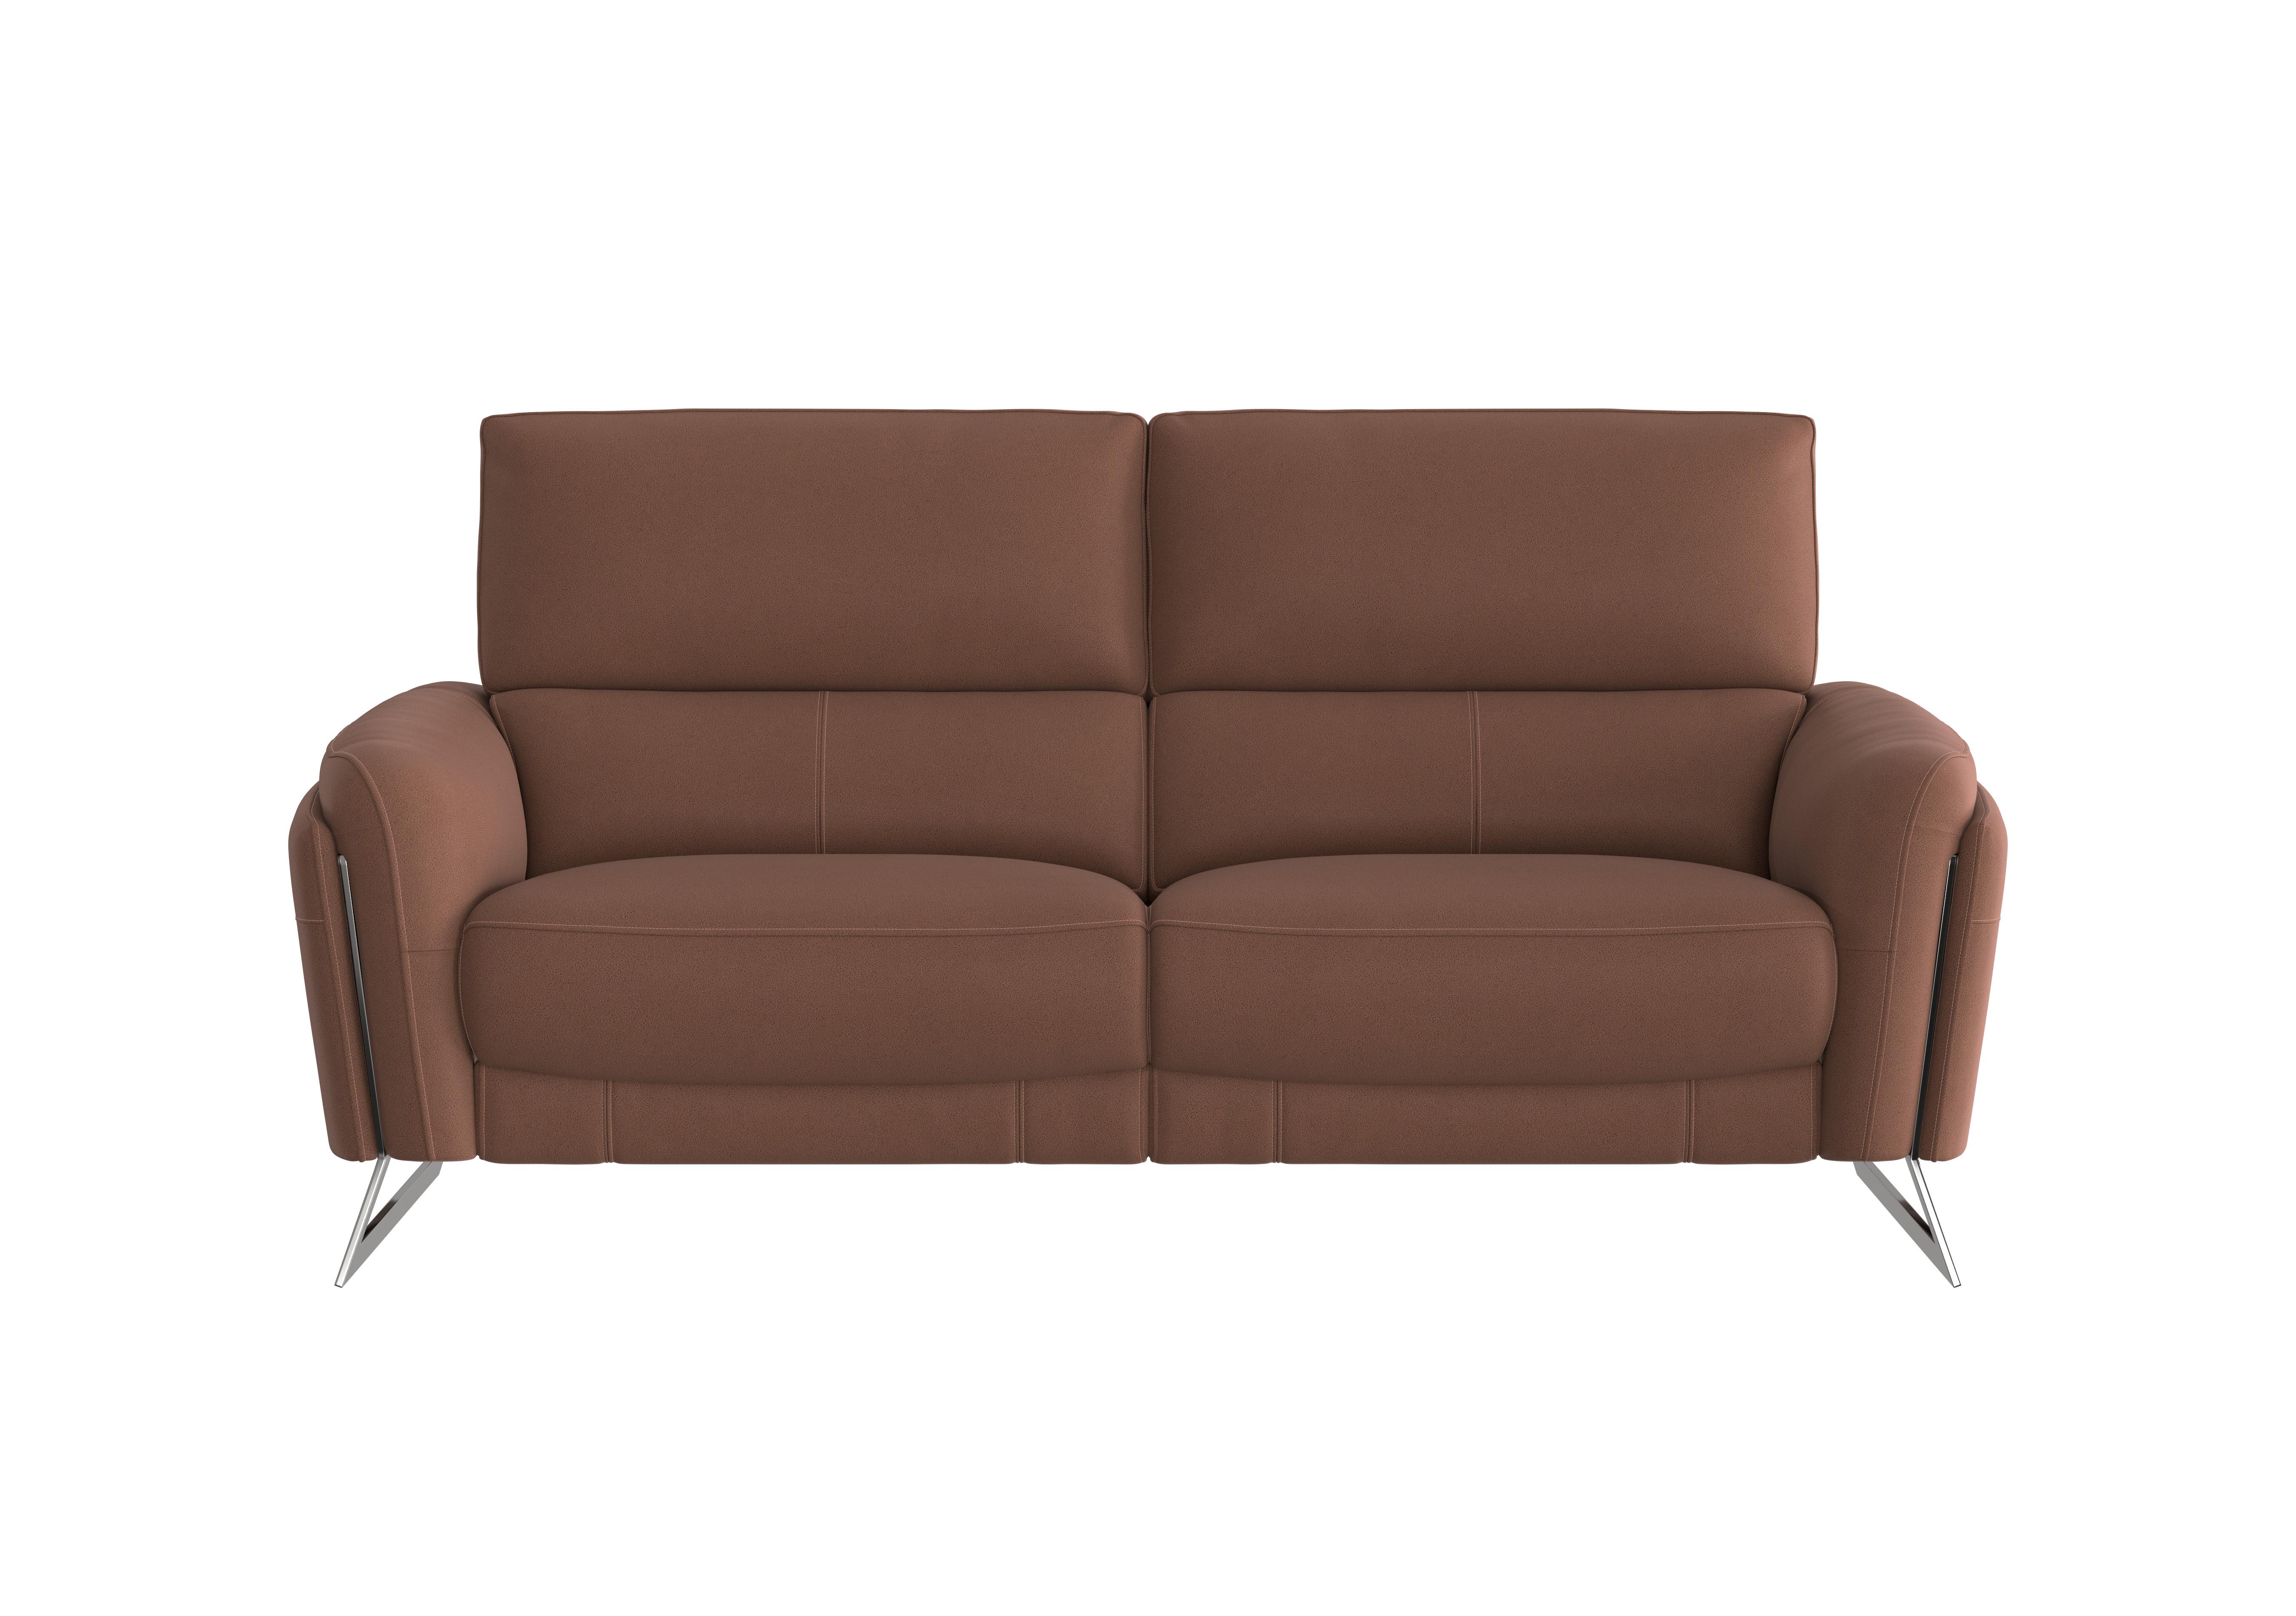 Amarilla 3 Seater Fabric Sofa in Bfa-Blj-R05 Dark Taupe on Furniture Village